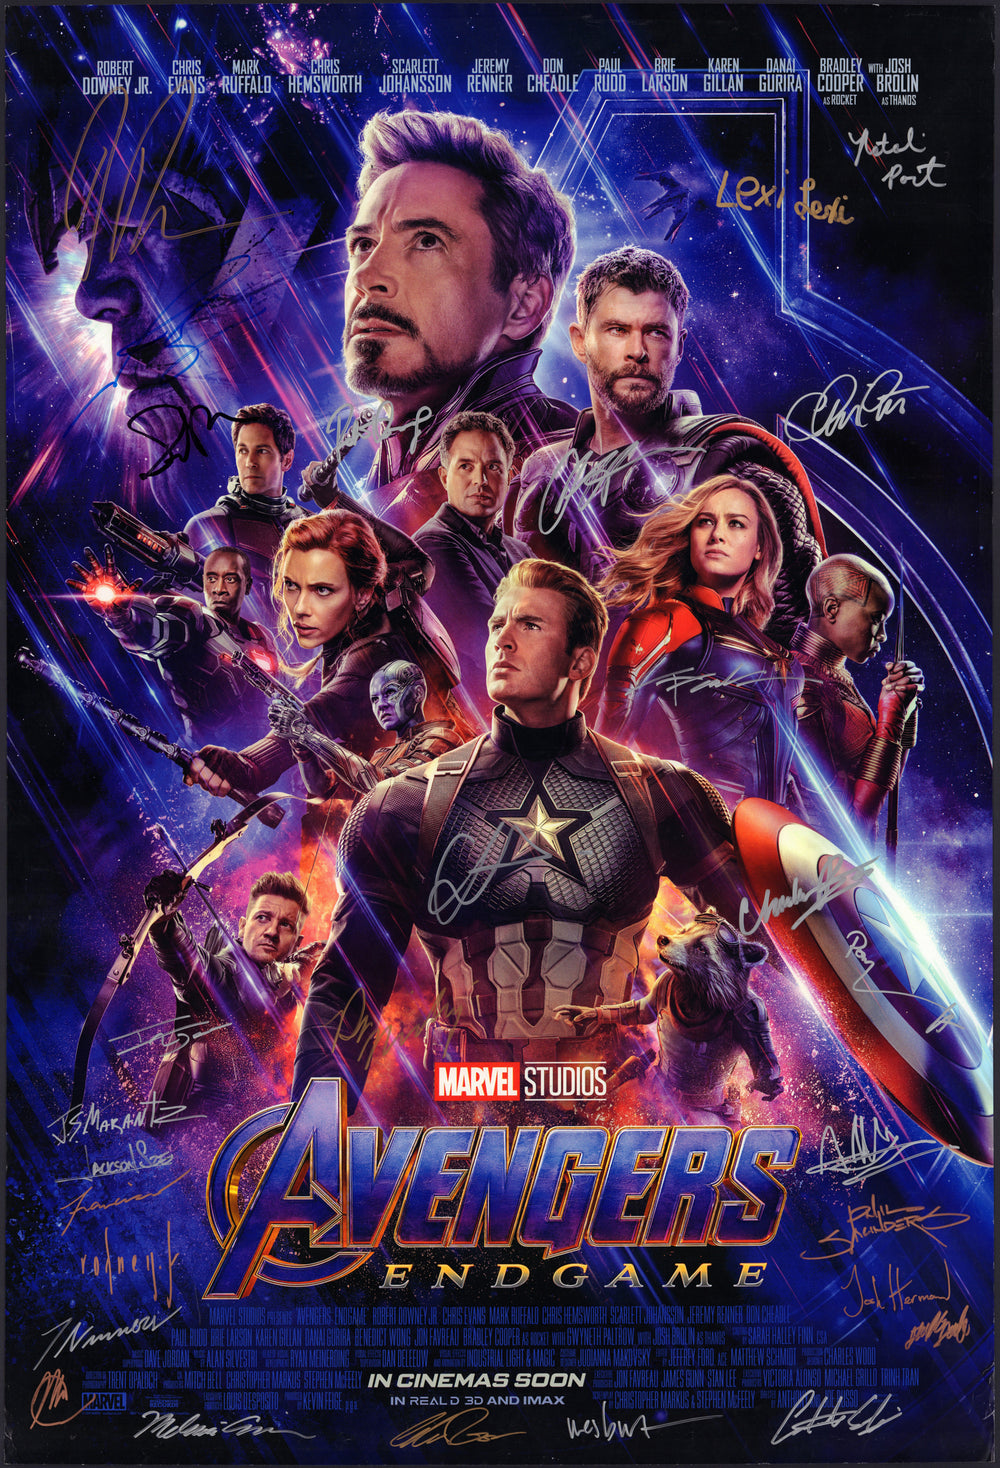 Avengers: Endgame 27x40 Poster Signed by Robert Downey Jr., Chris Hemsworth, Chris Pratt, Josh Brolin, Natalie Portman, Pom Klementieff, Joe Russo, Paul Rudd, & Chadwick Boseman